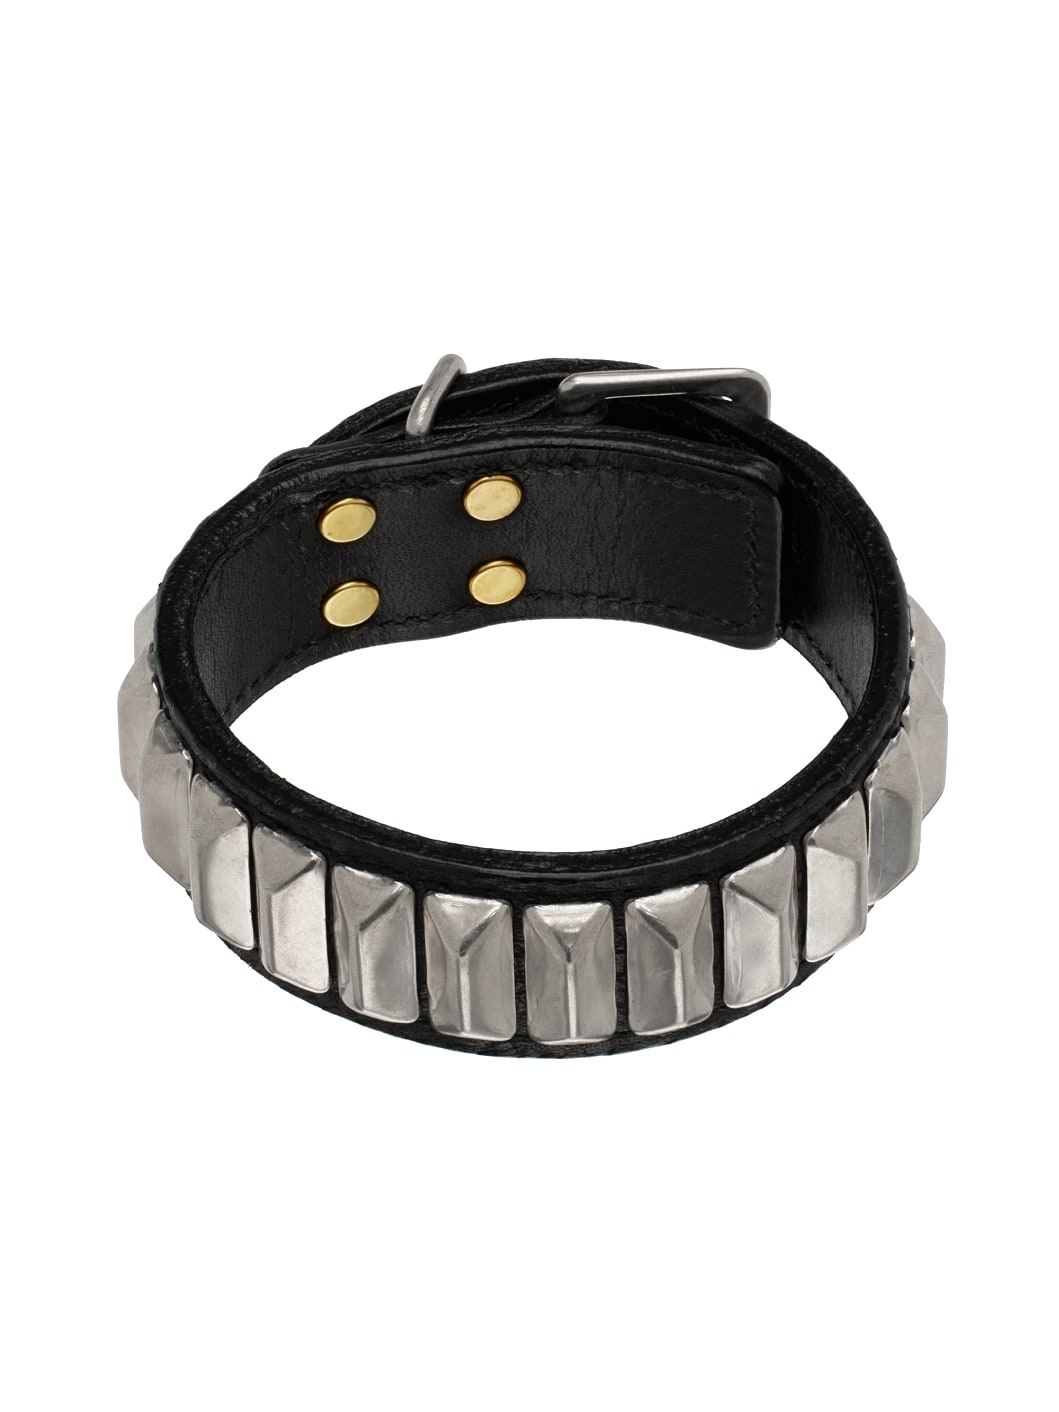 Black & Silver Leather Bracelet - 1